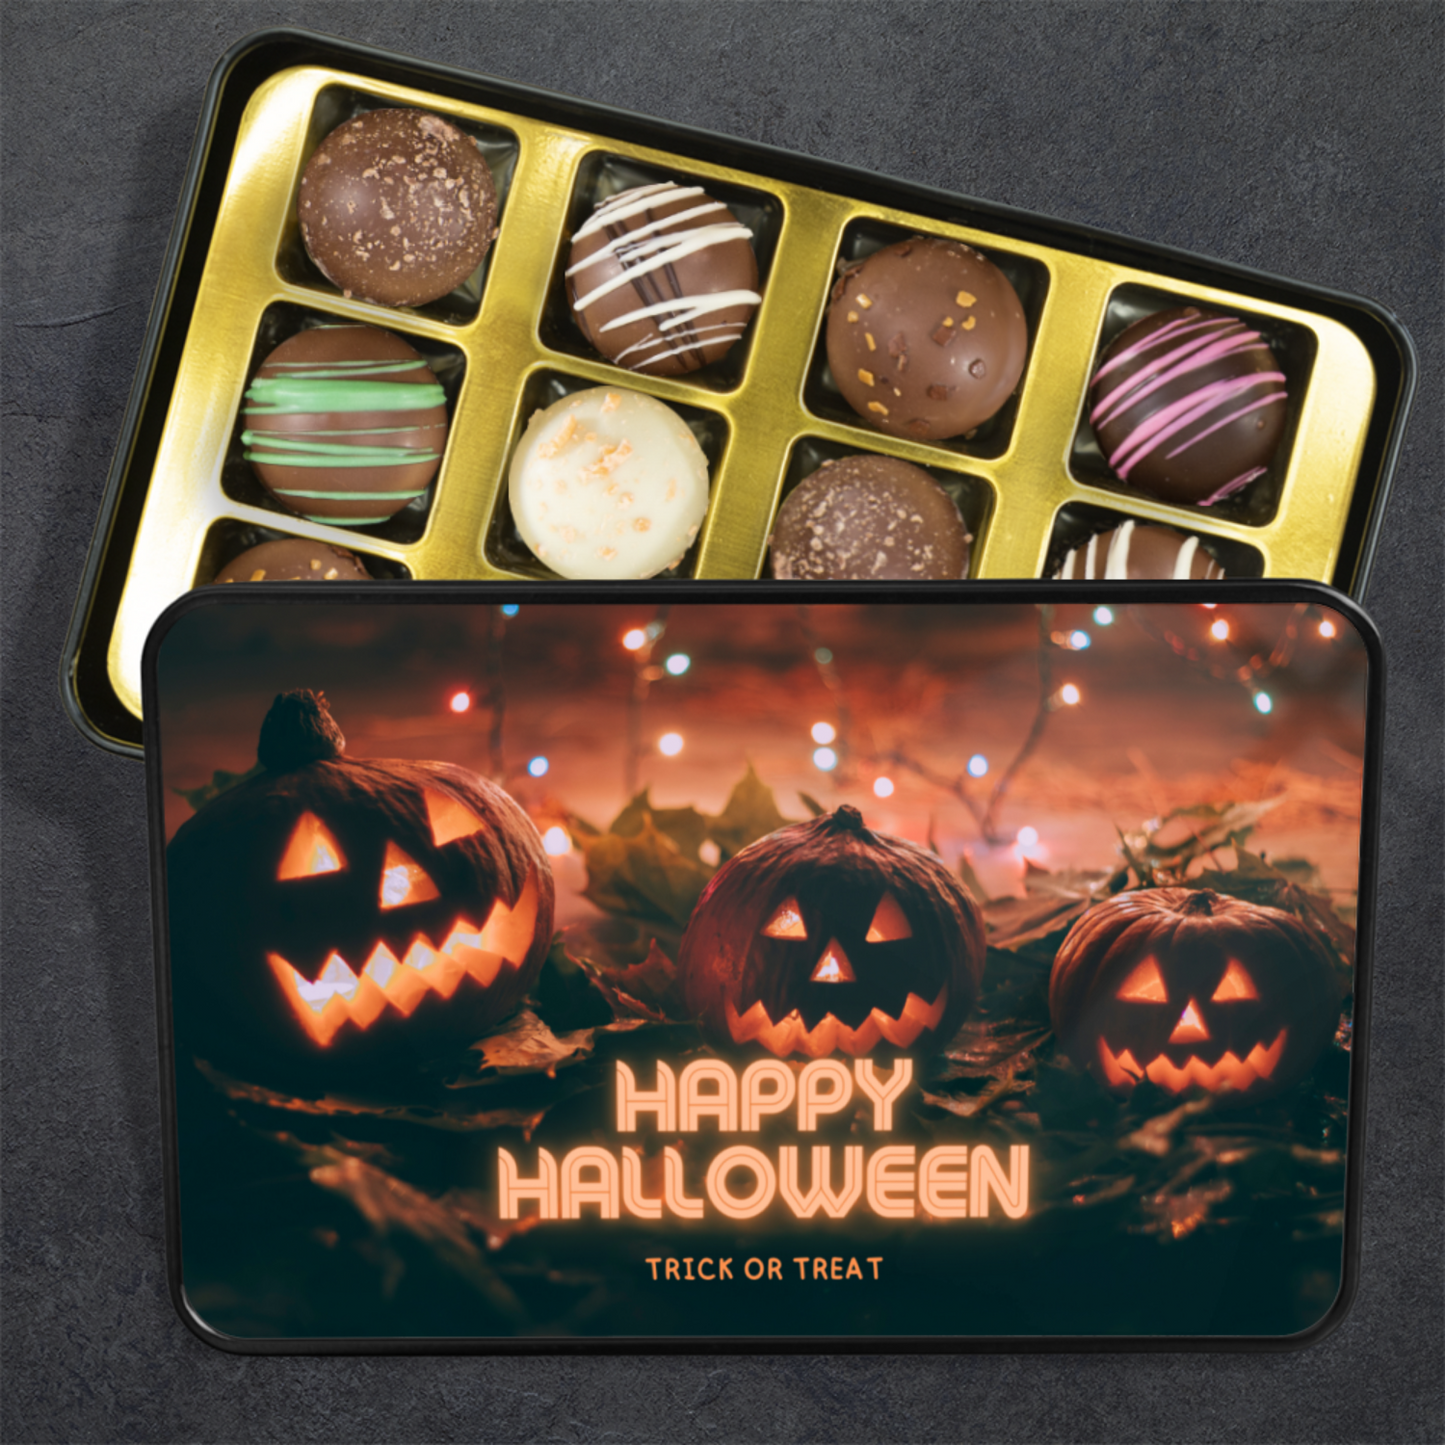 Trick or Treat Halloween Candy Gift Box, Chocolate Truffles